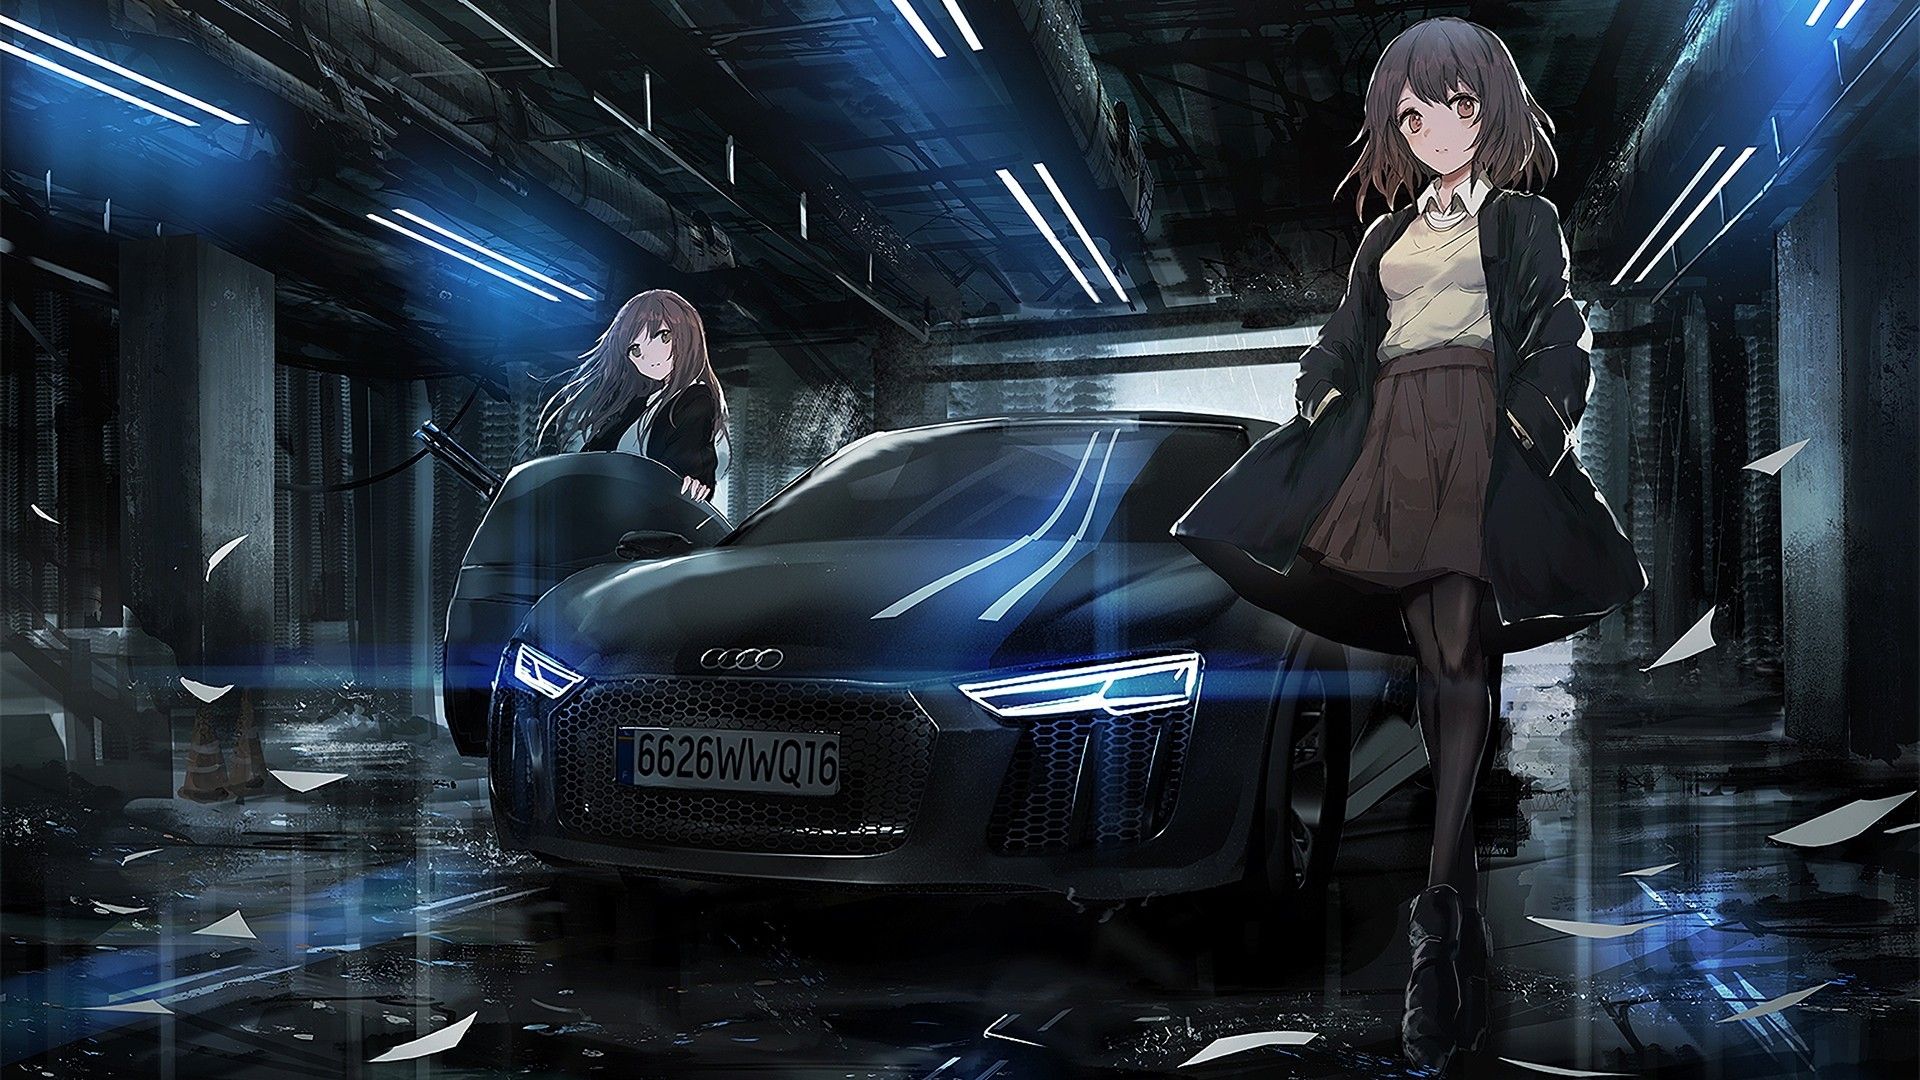 Anime Girl with Car Wallpaper: Image